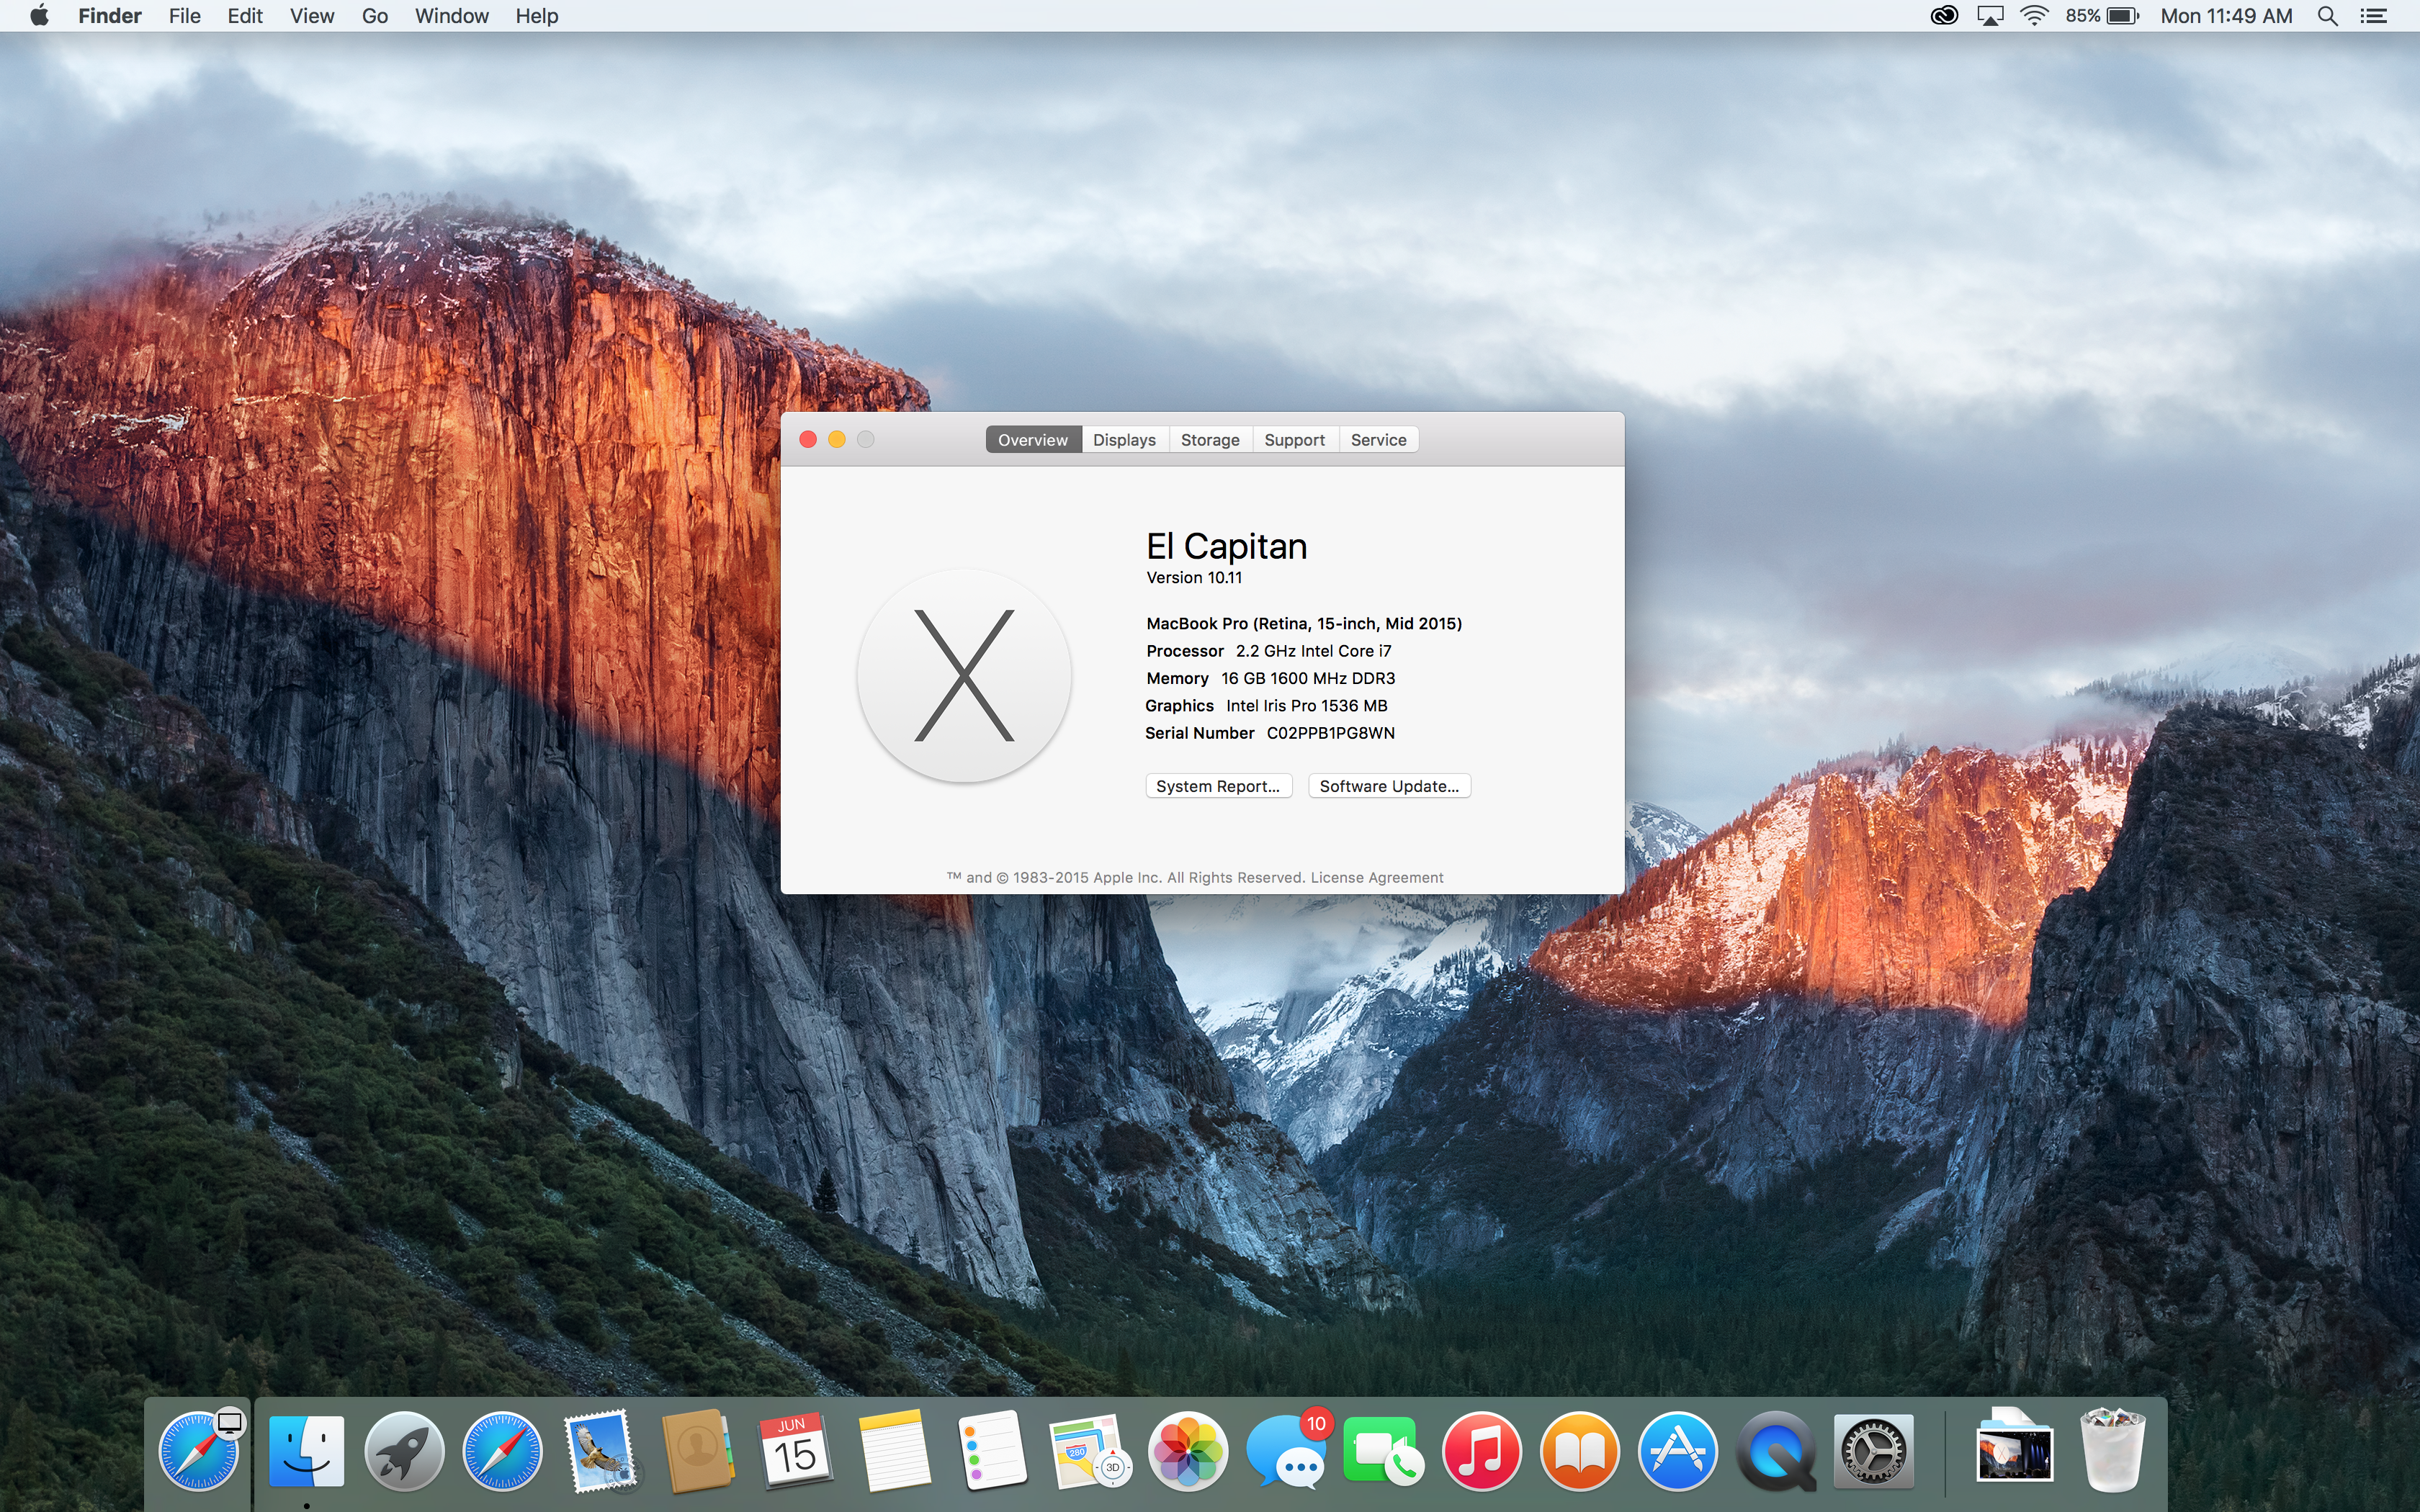 Update for mac os x 10.6.8